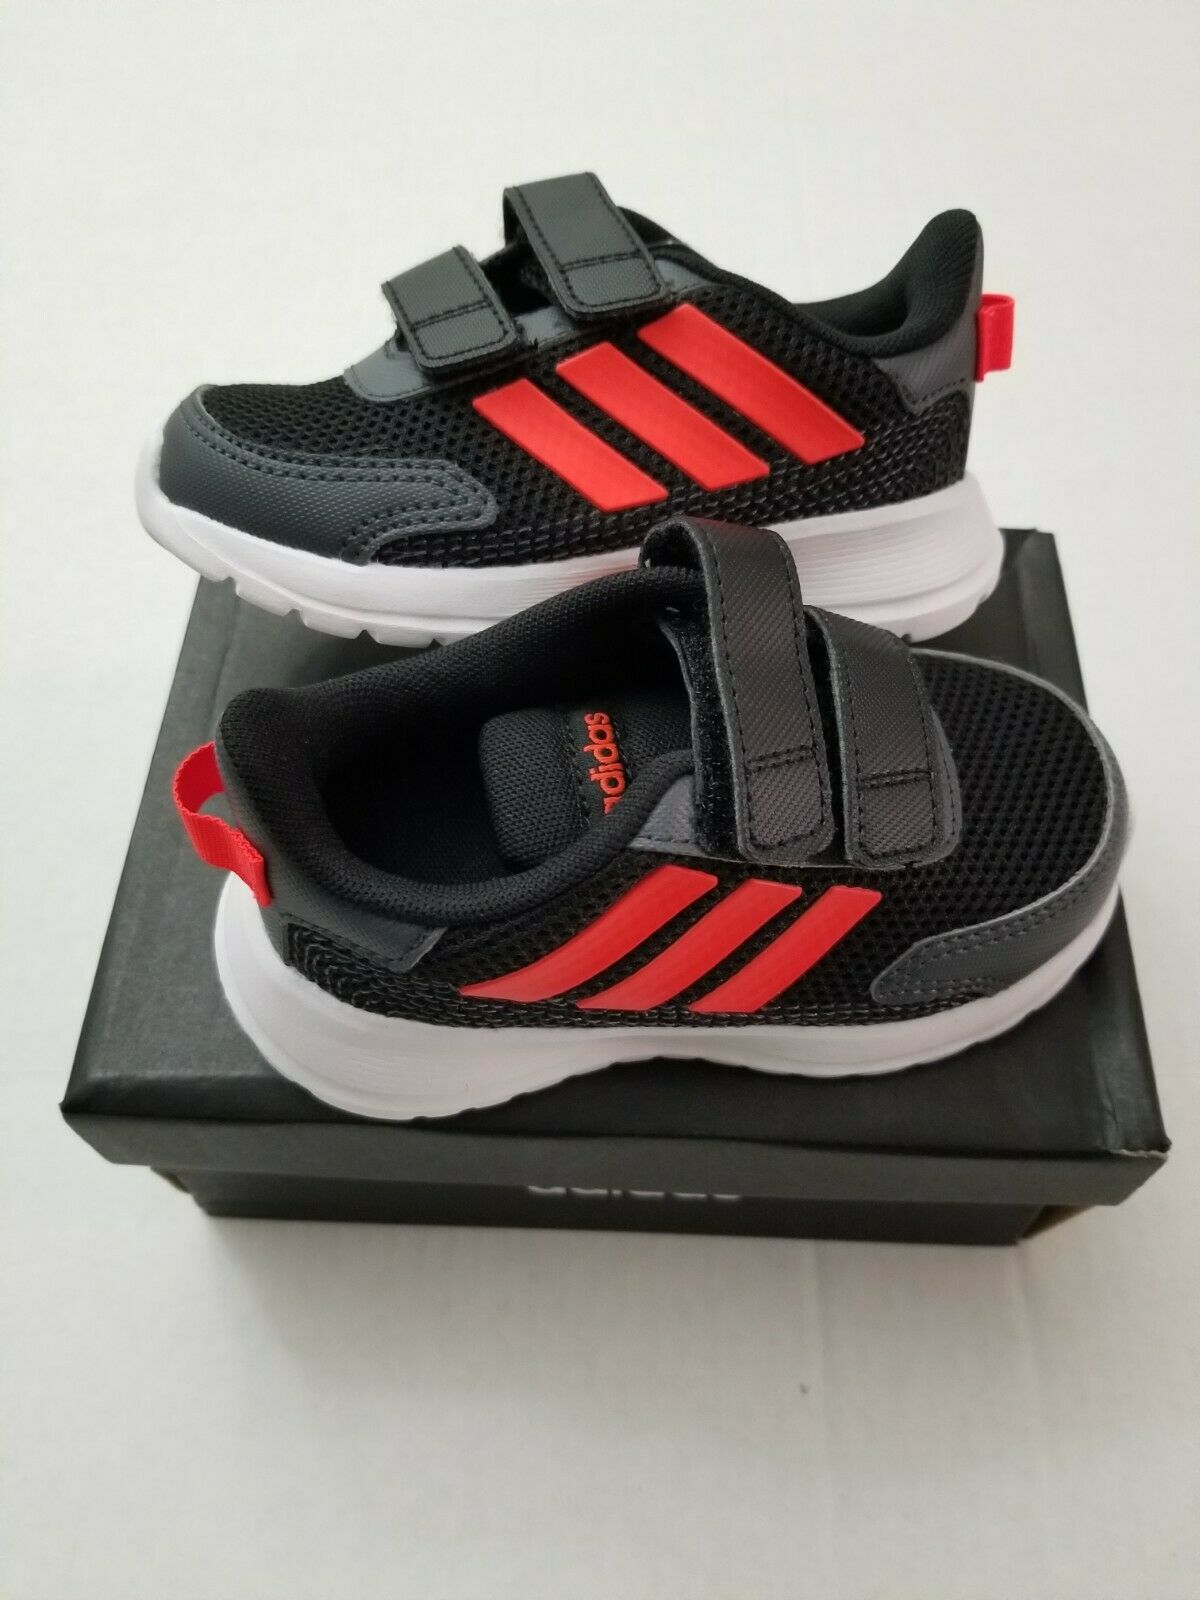 Adidas Tensaur Run I Toddler Boys Sneakers Shoes Casual Black EG4139 Size 8k